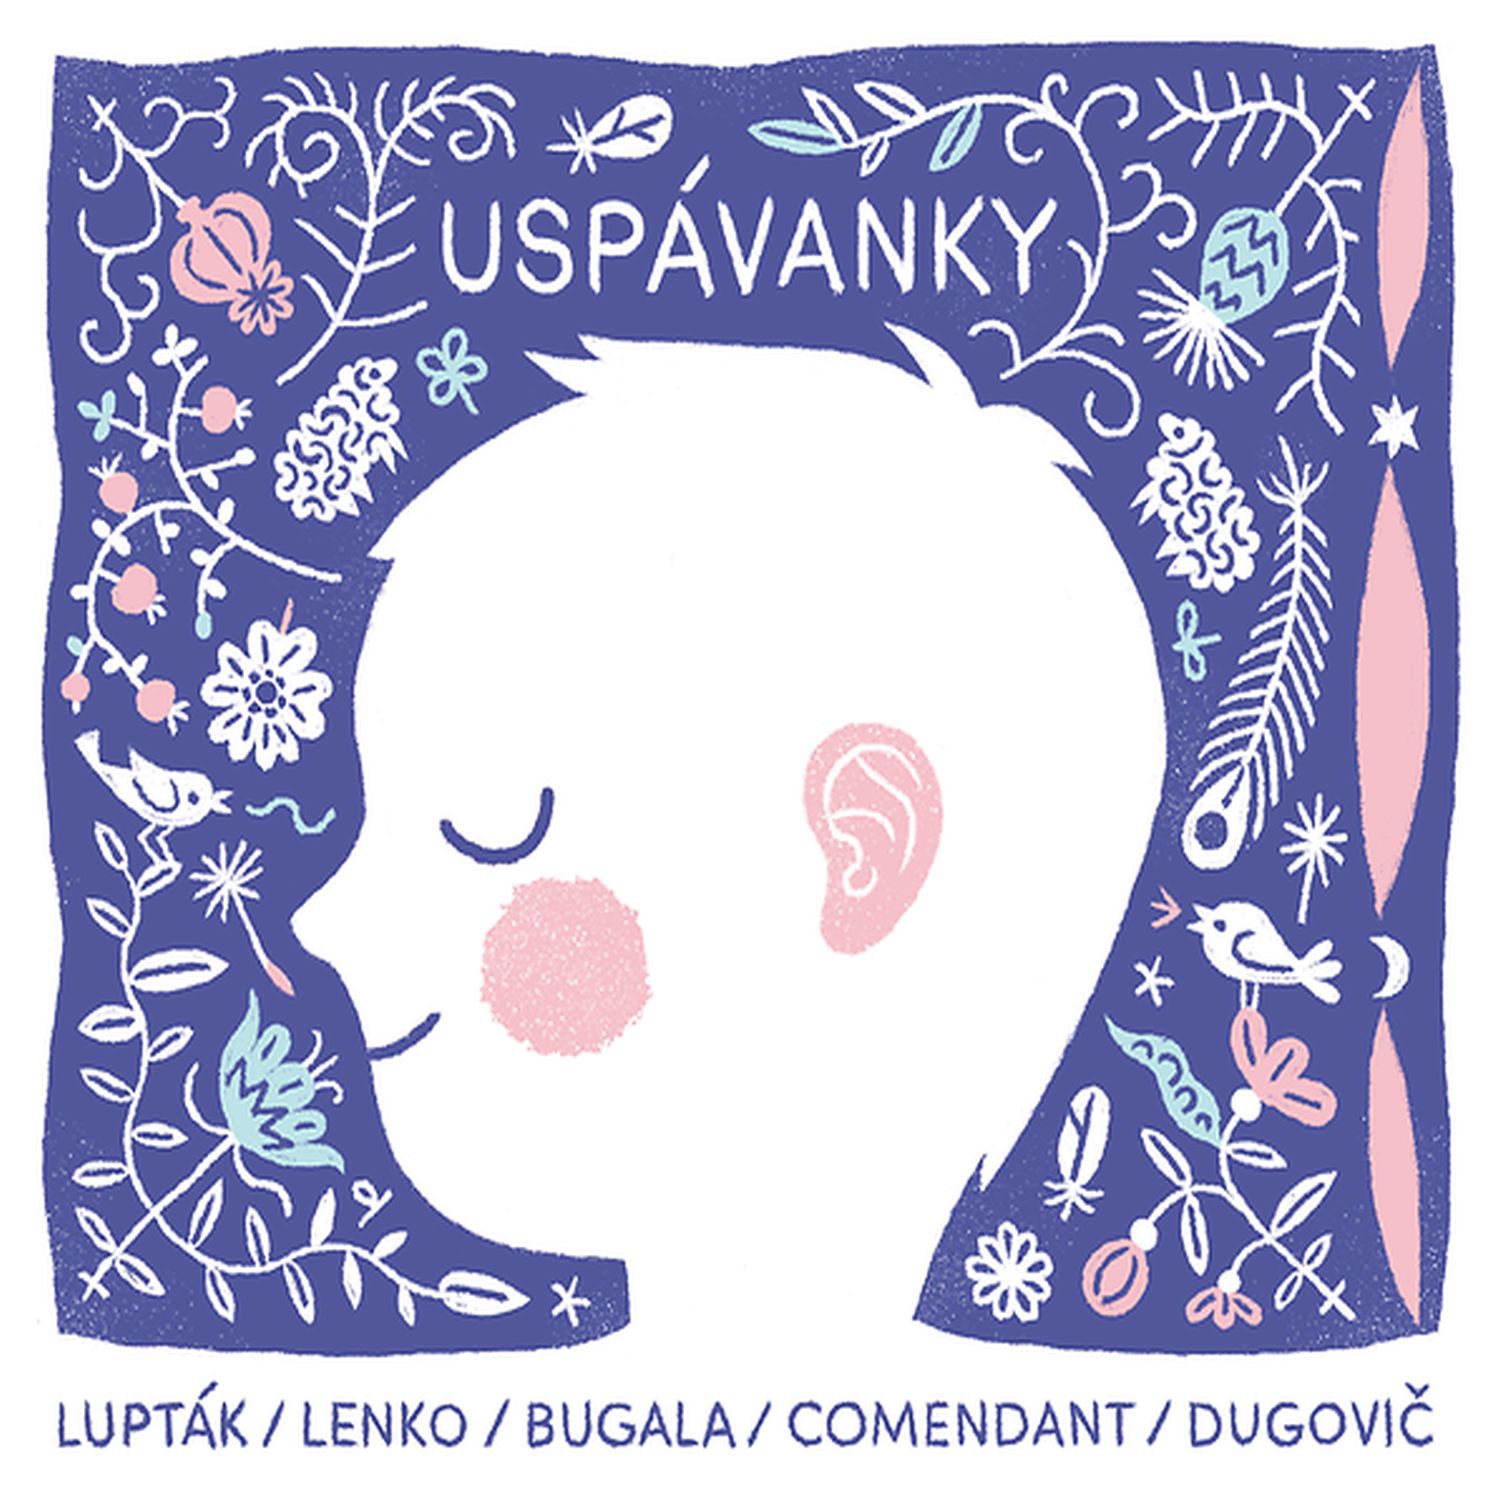 CD Shop - LUPTAK / LENKO / BUGALA / COMENDANT / DUGOVIC USPAVANKY